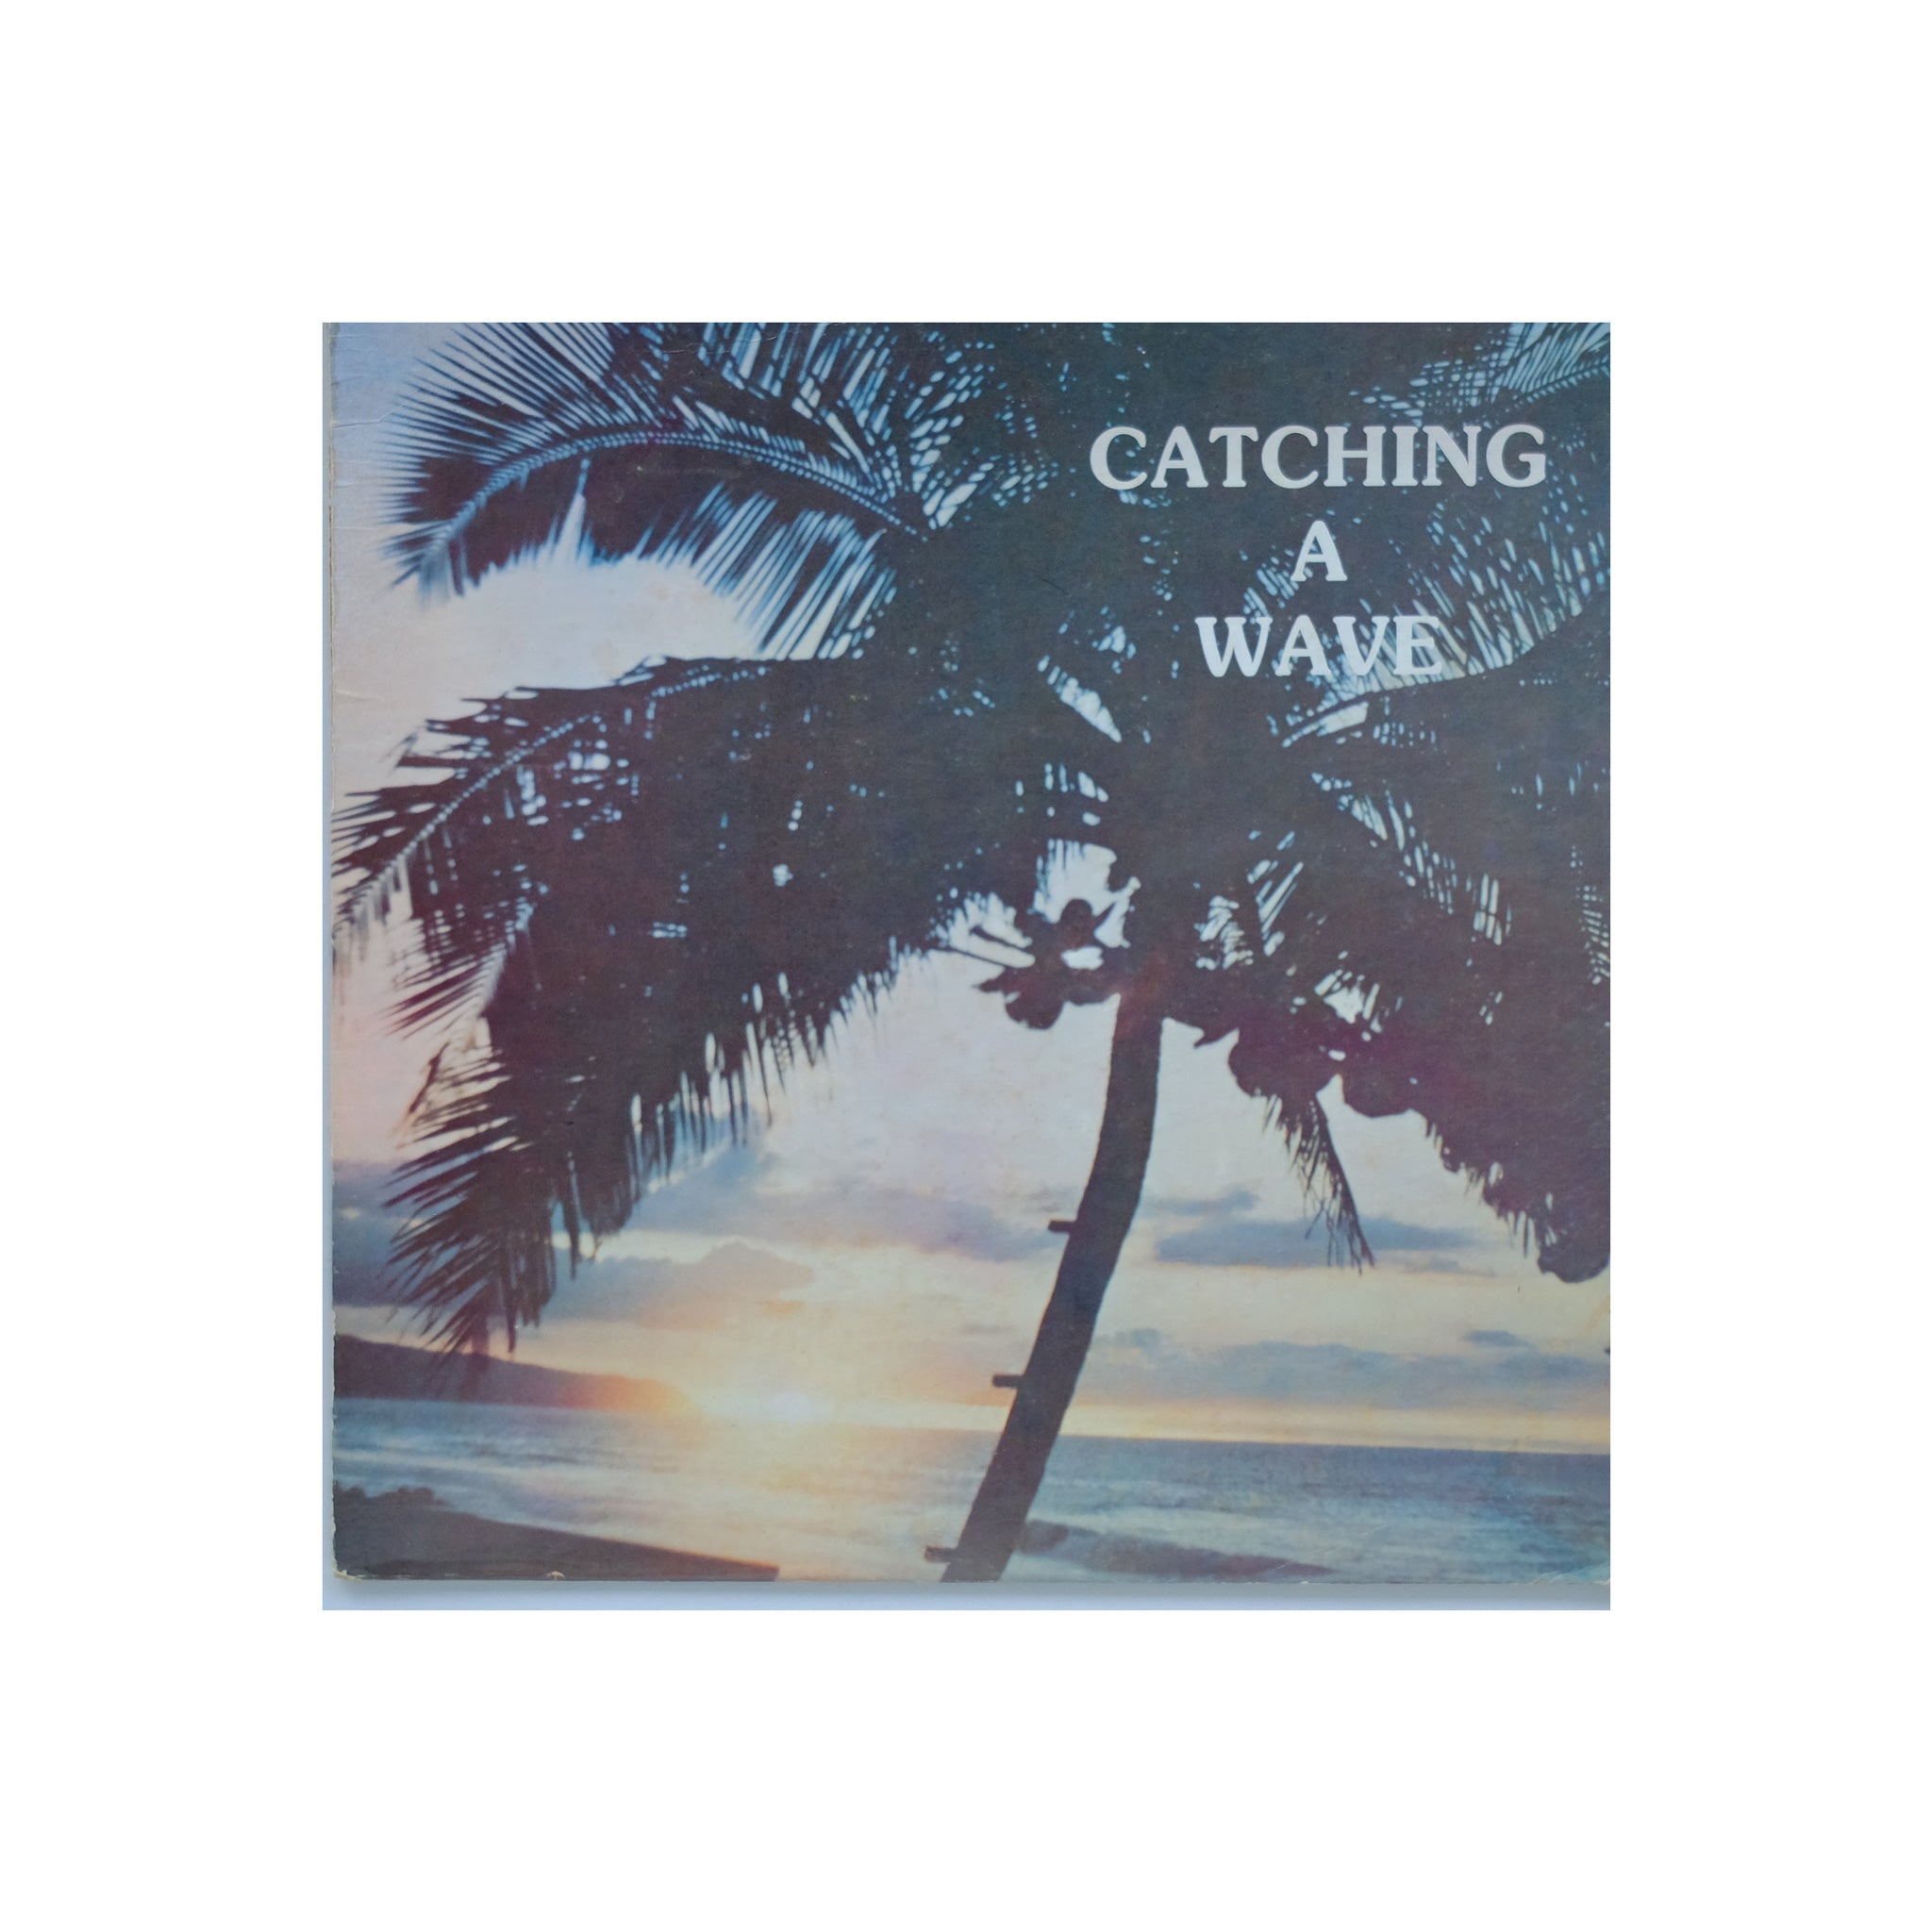 Steve & Teresa - Catching A Wave (original 1983 pressing) [VG+]